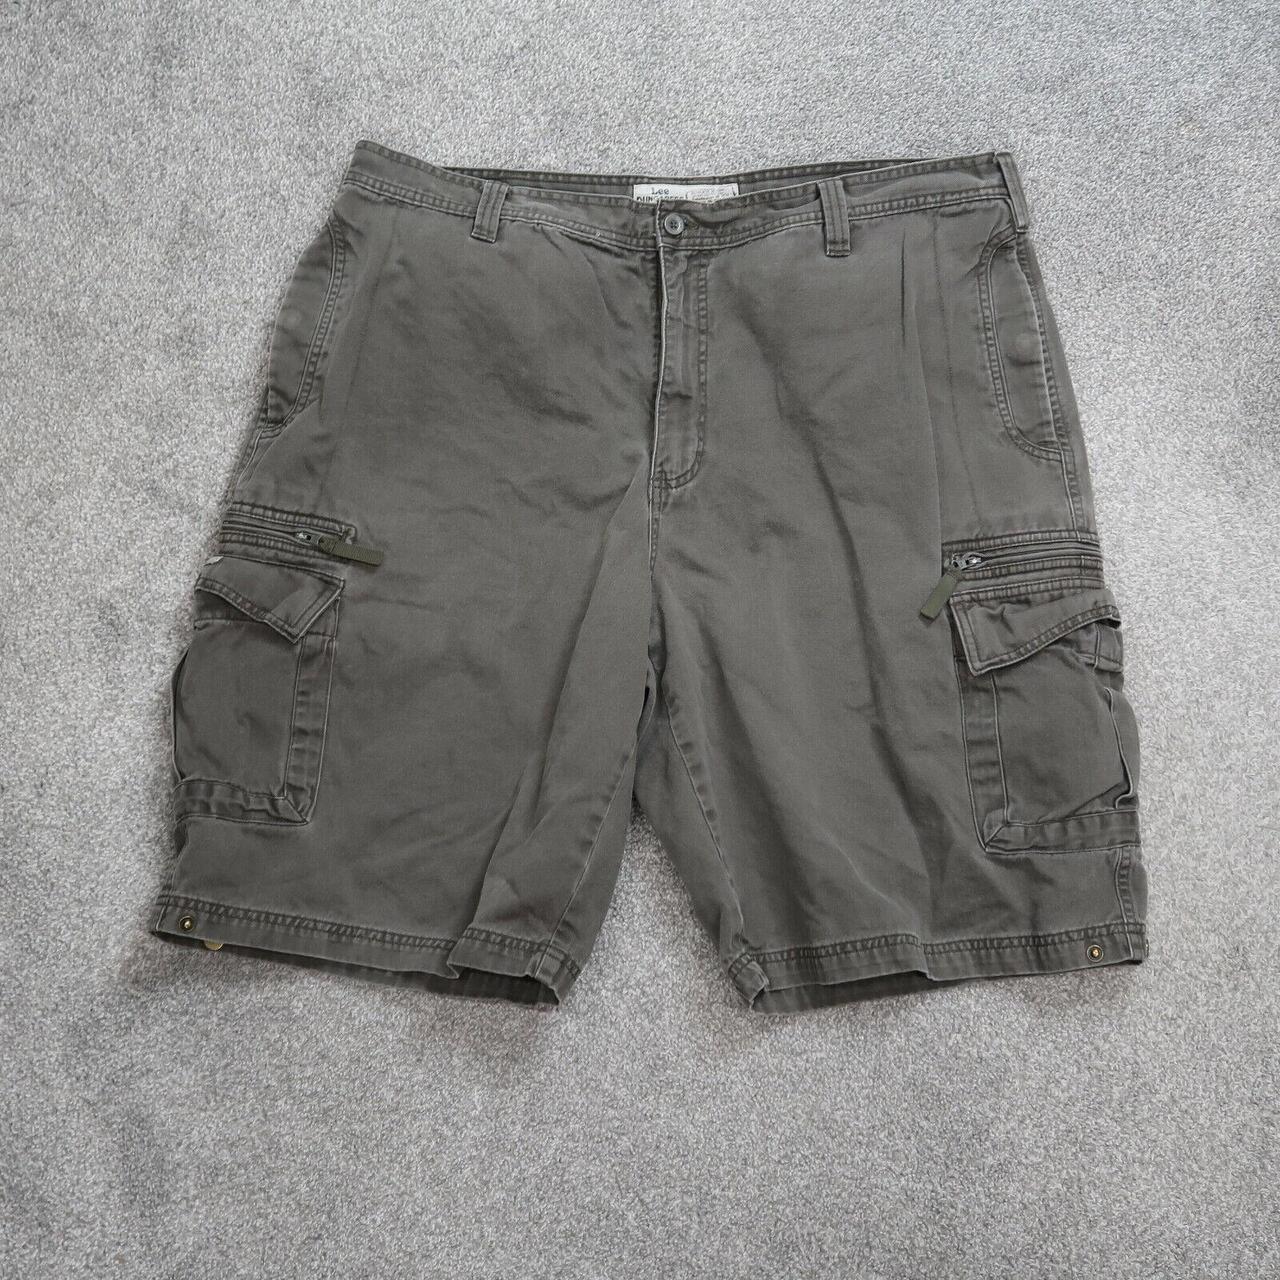 Lee Dungaree Cargo Shorts Men's Size 40 Flat Front... - Depop